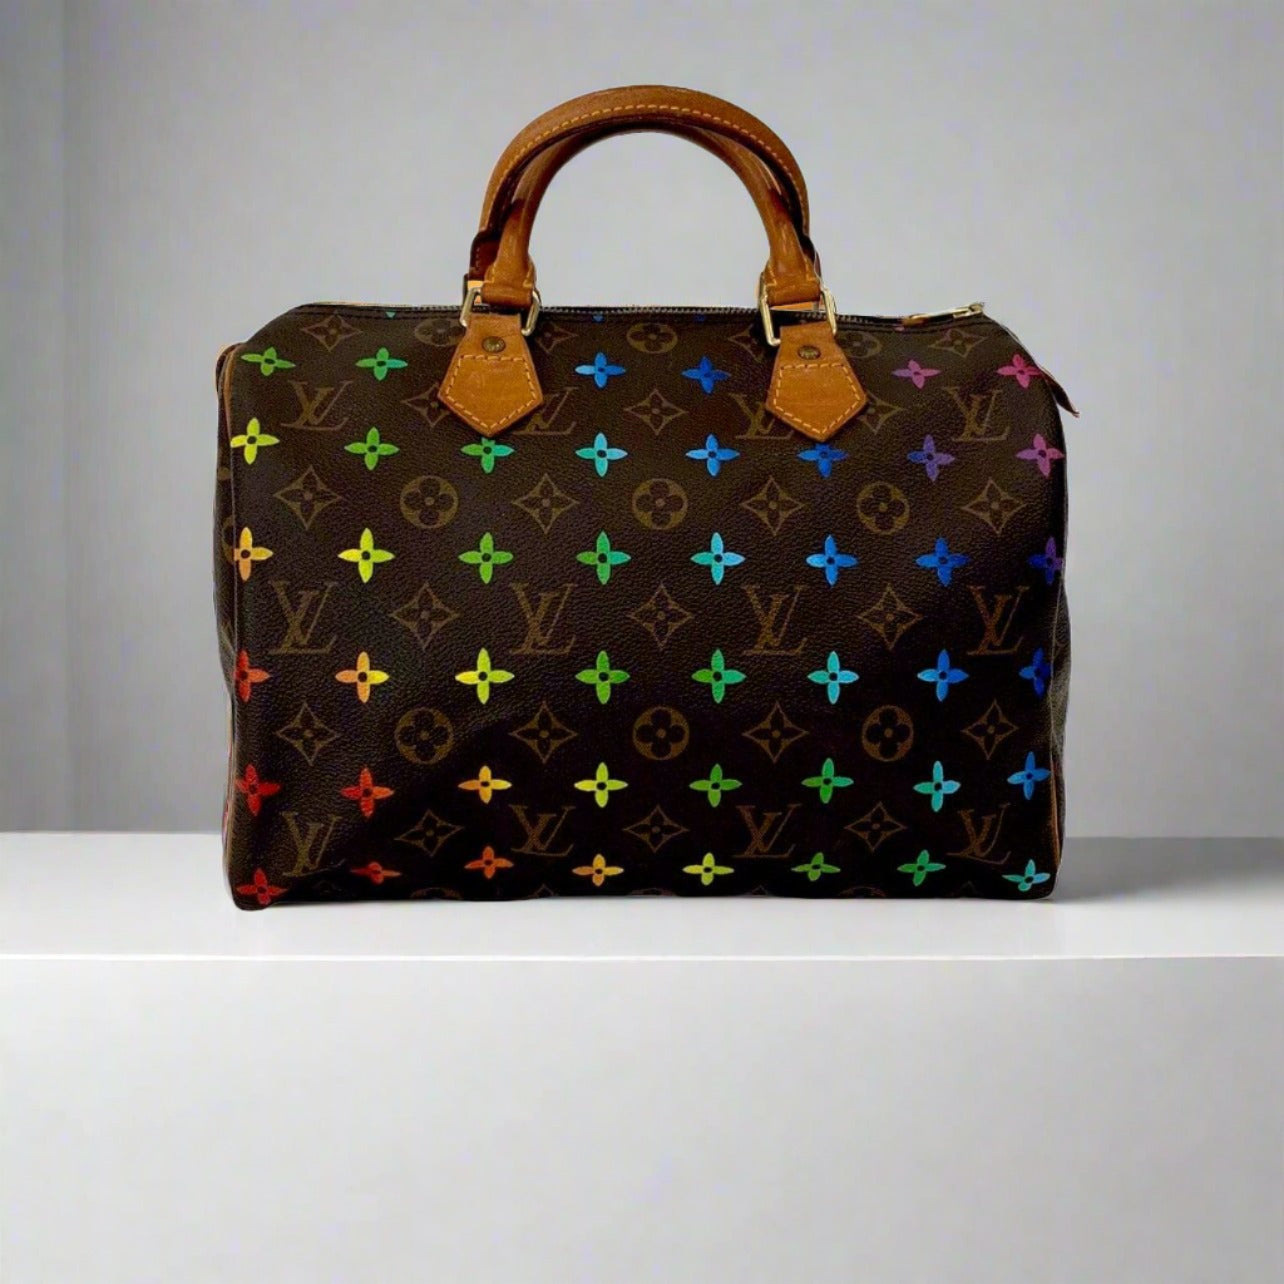 Unmistakable Louis Vuitton Monogram design may have been inspired